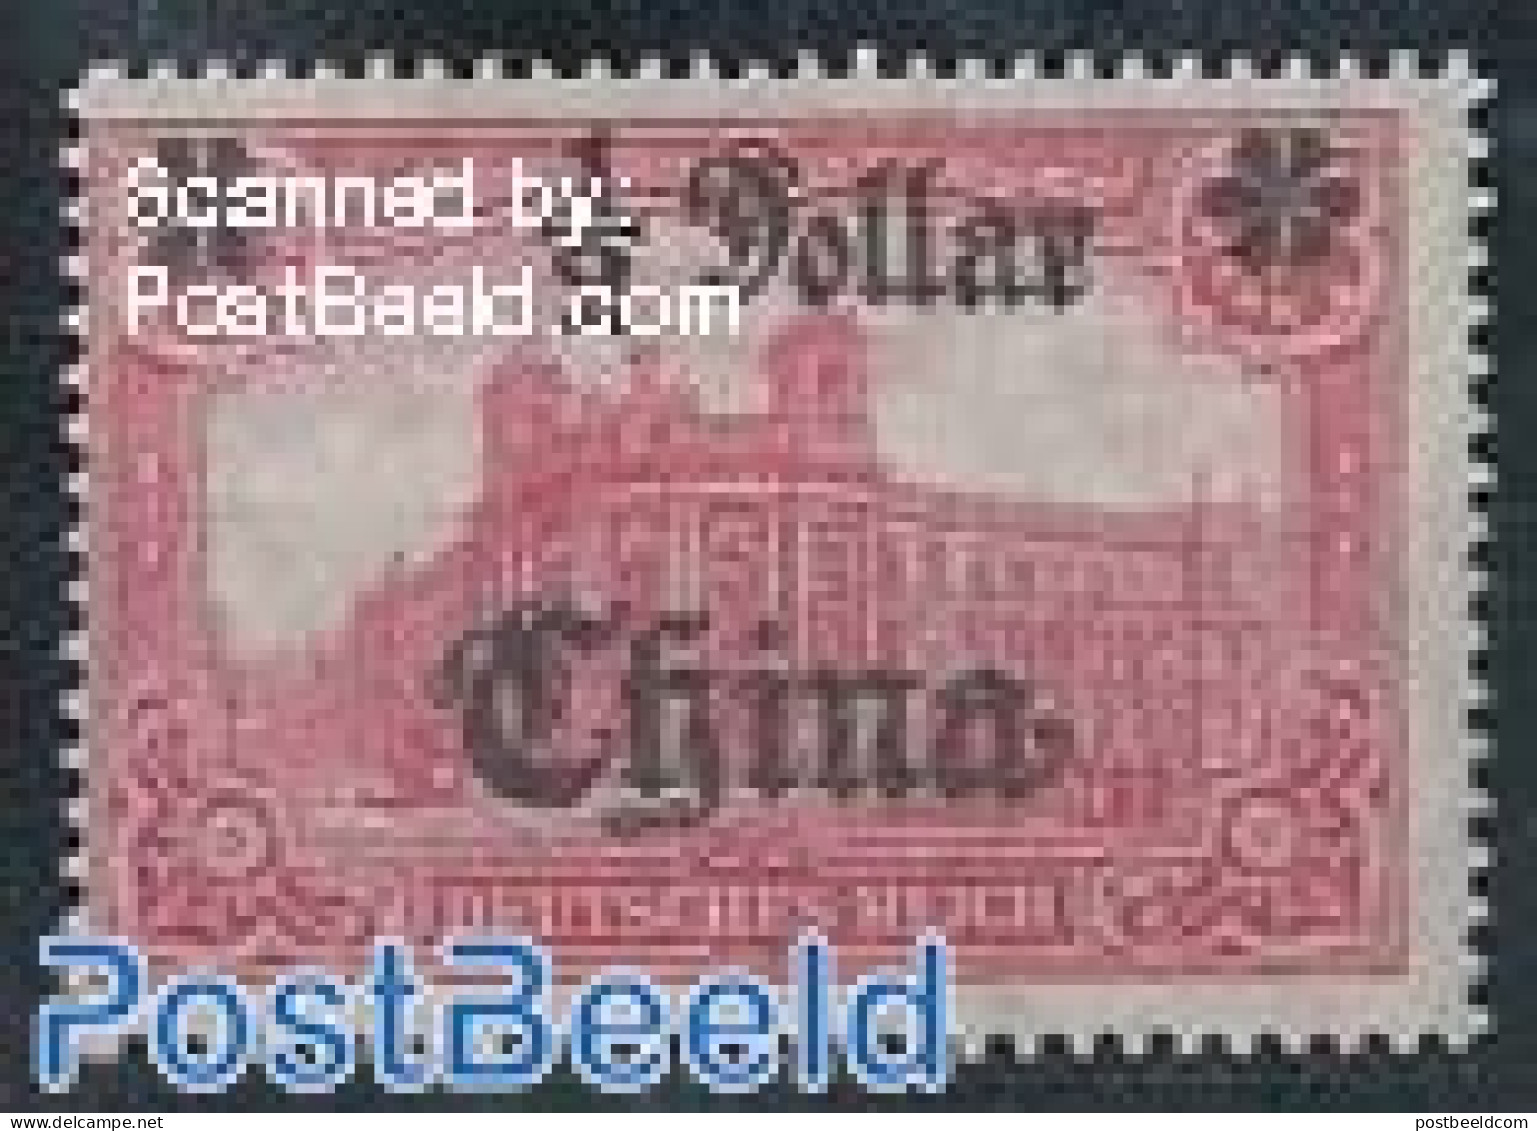 China (before 1949) 1918 German Post, 1/2$, War Print, Right Overprint, Mint NH - Chine (bureaux)